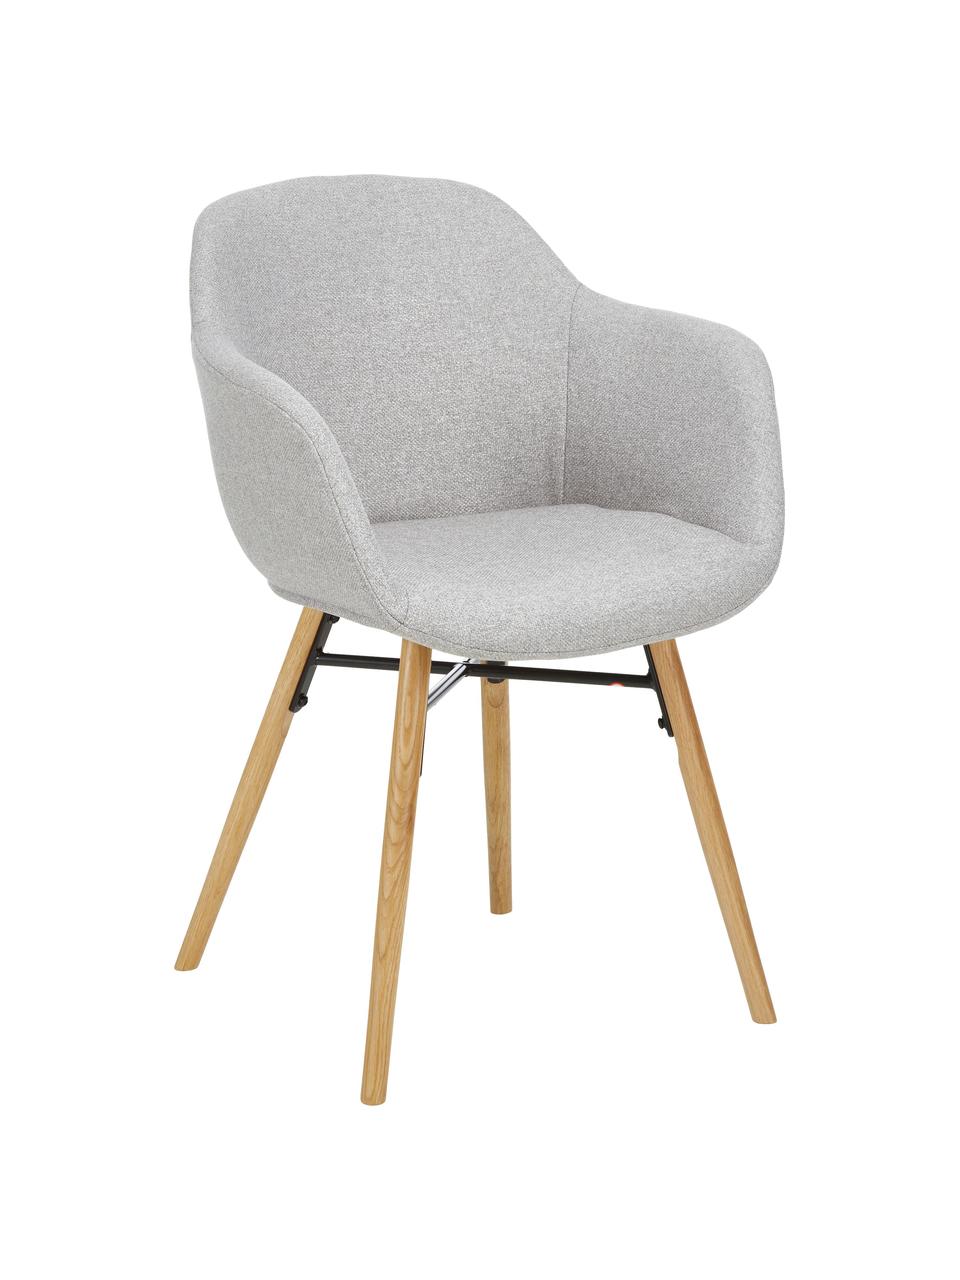 Petite chaise scandinave gris clair Fiji, Tissu gris clair, larg. 59 x prof. 55 cm